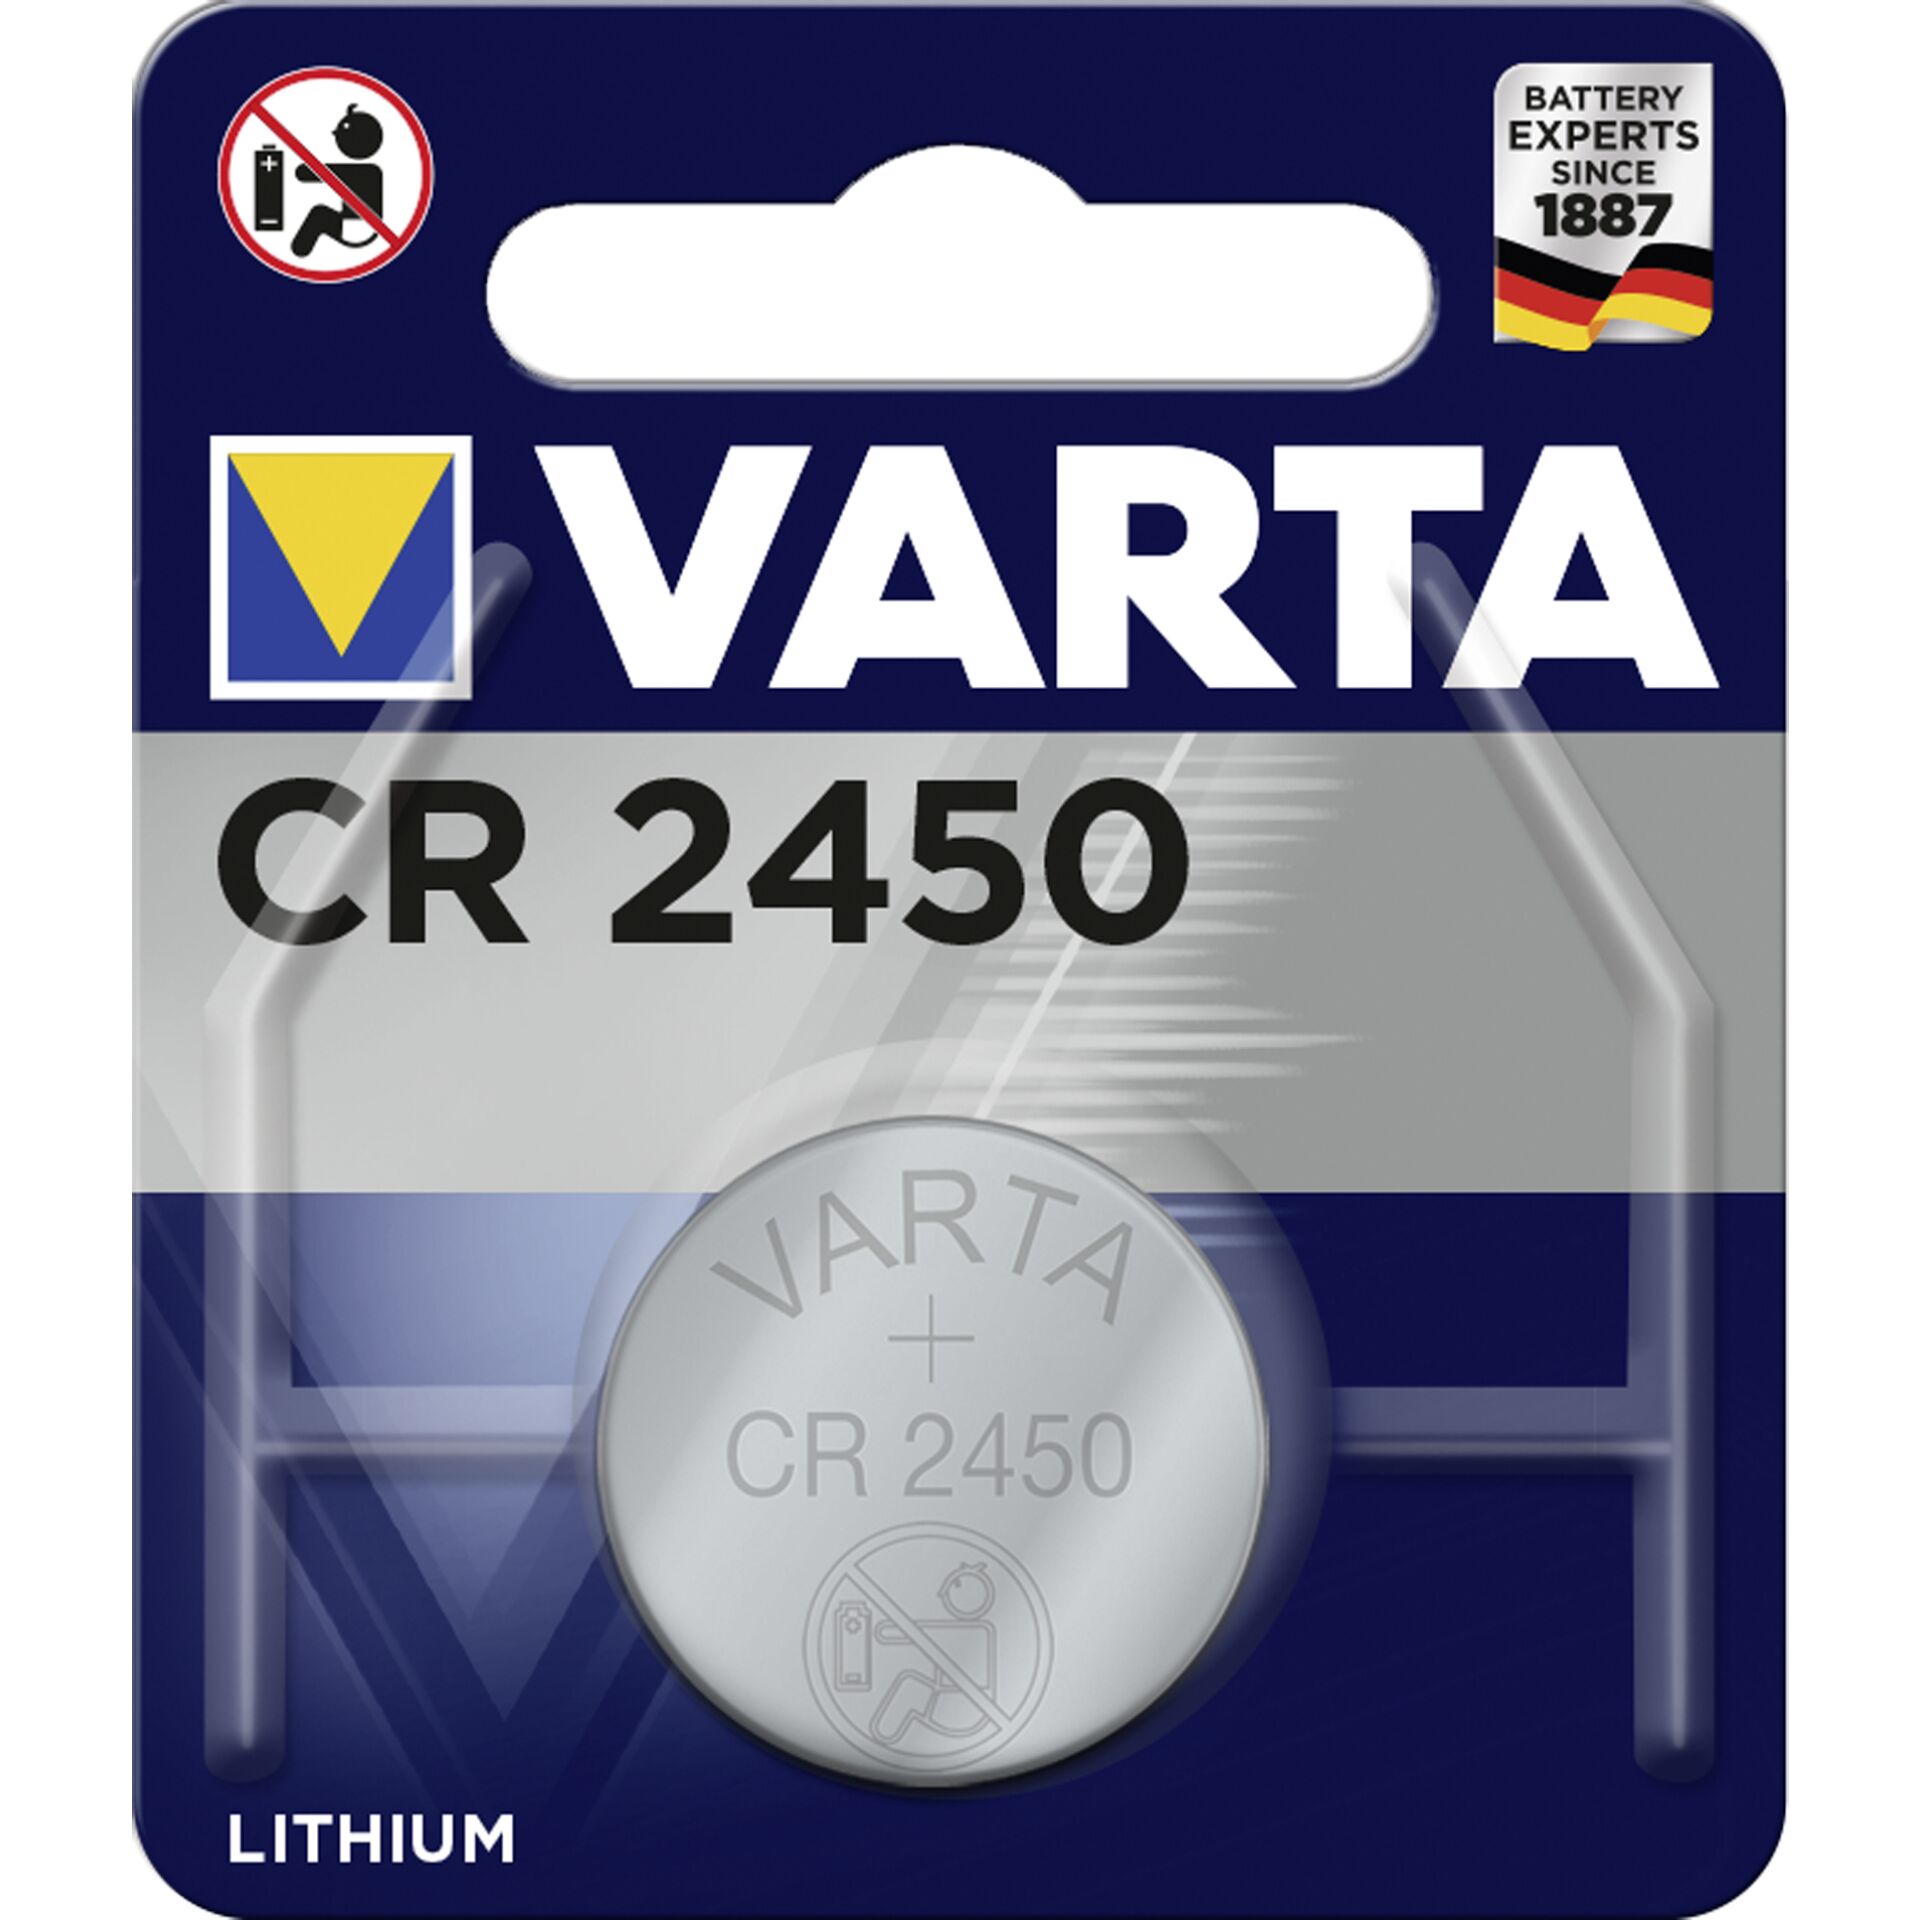 100x1 Varta electronic CR 2450 PU Master box